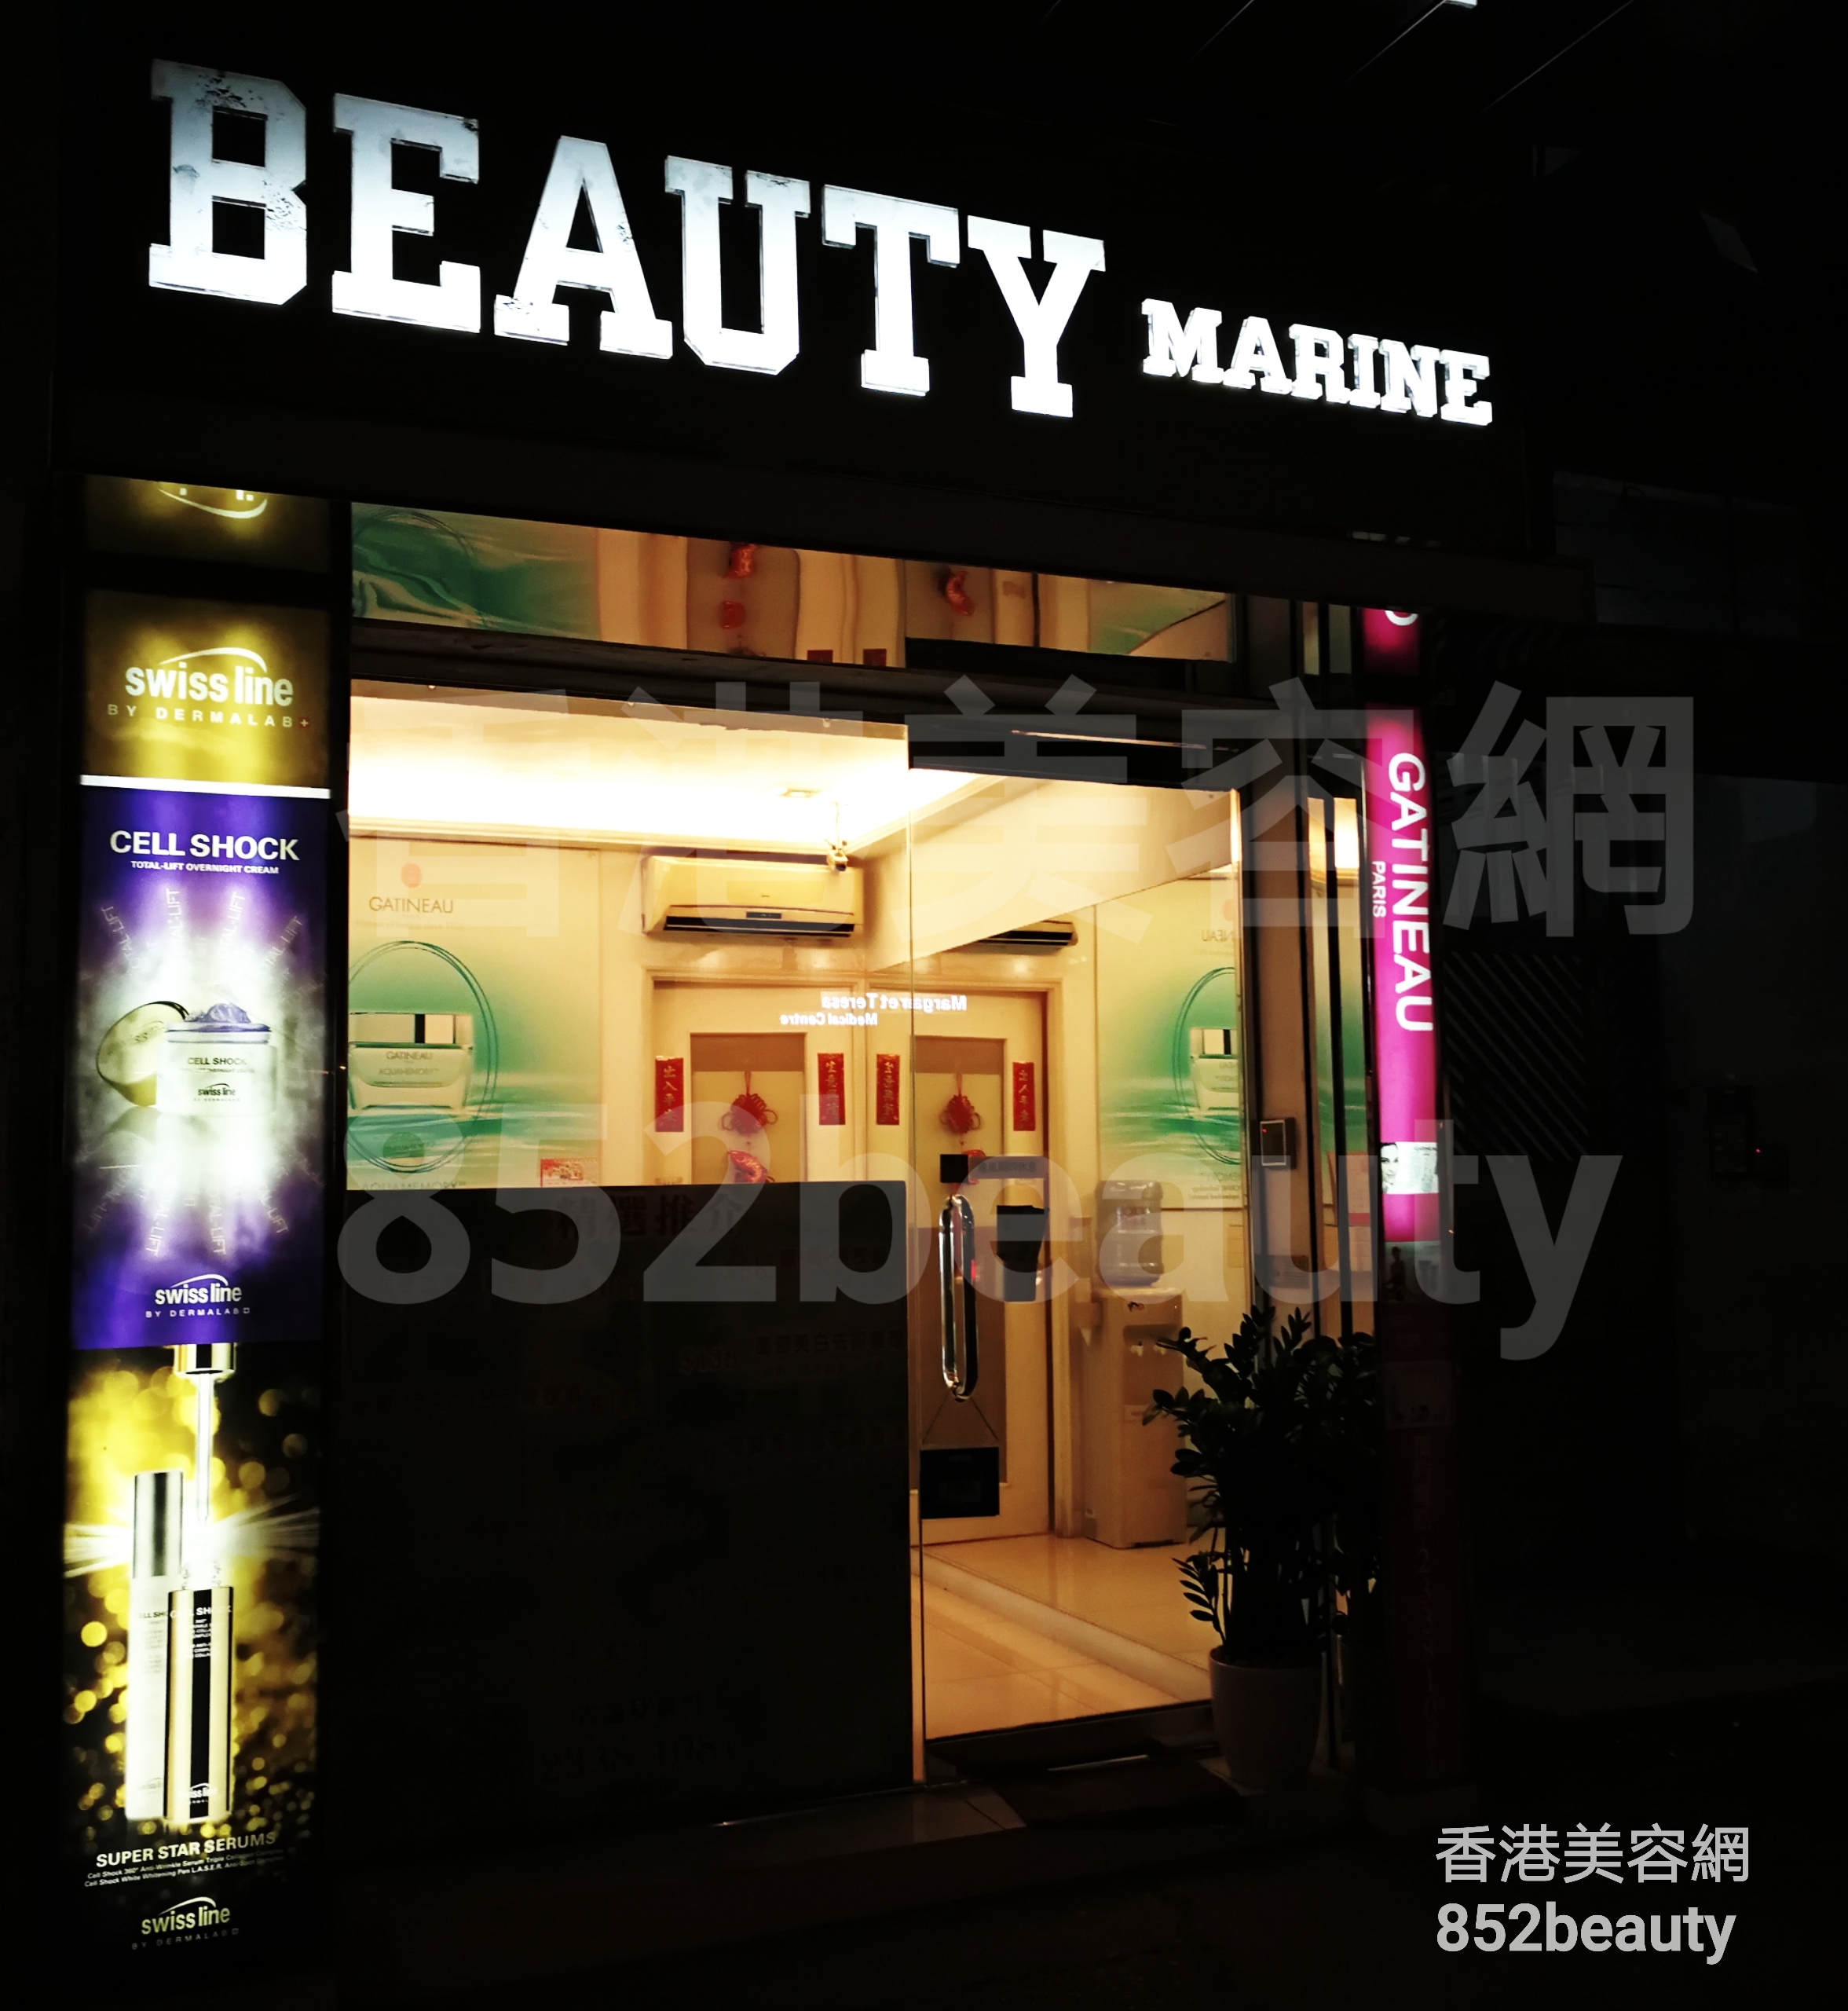 脫毛: Beauty Marine